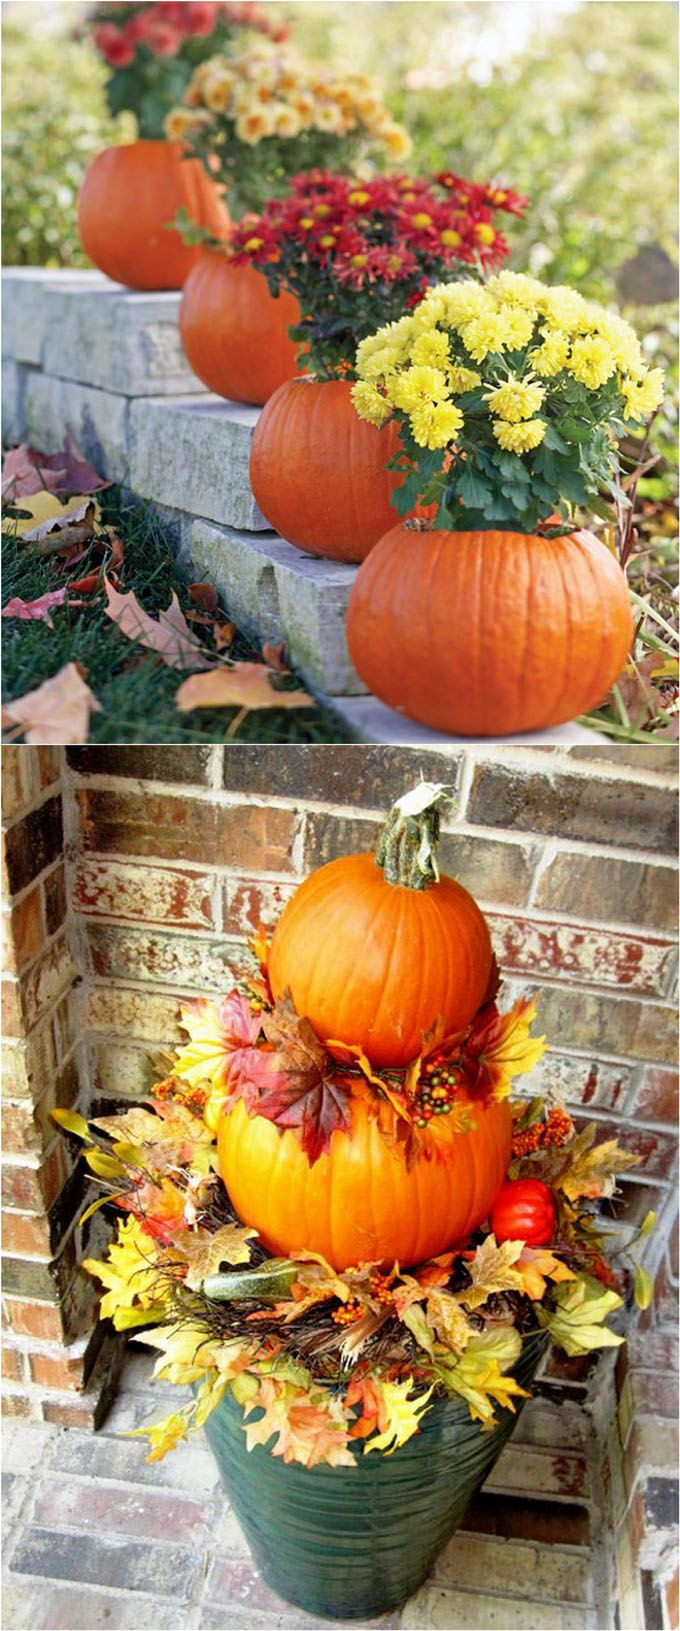 Autumn Decorations Diy
 25 Splendid DIY Fall Outdoor Decorations